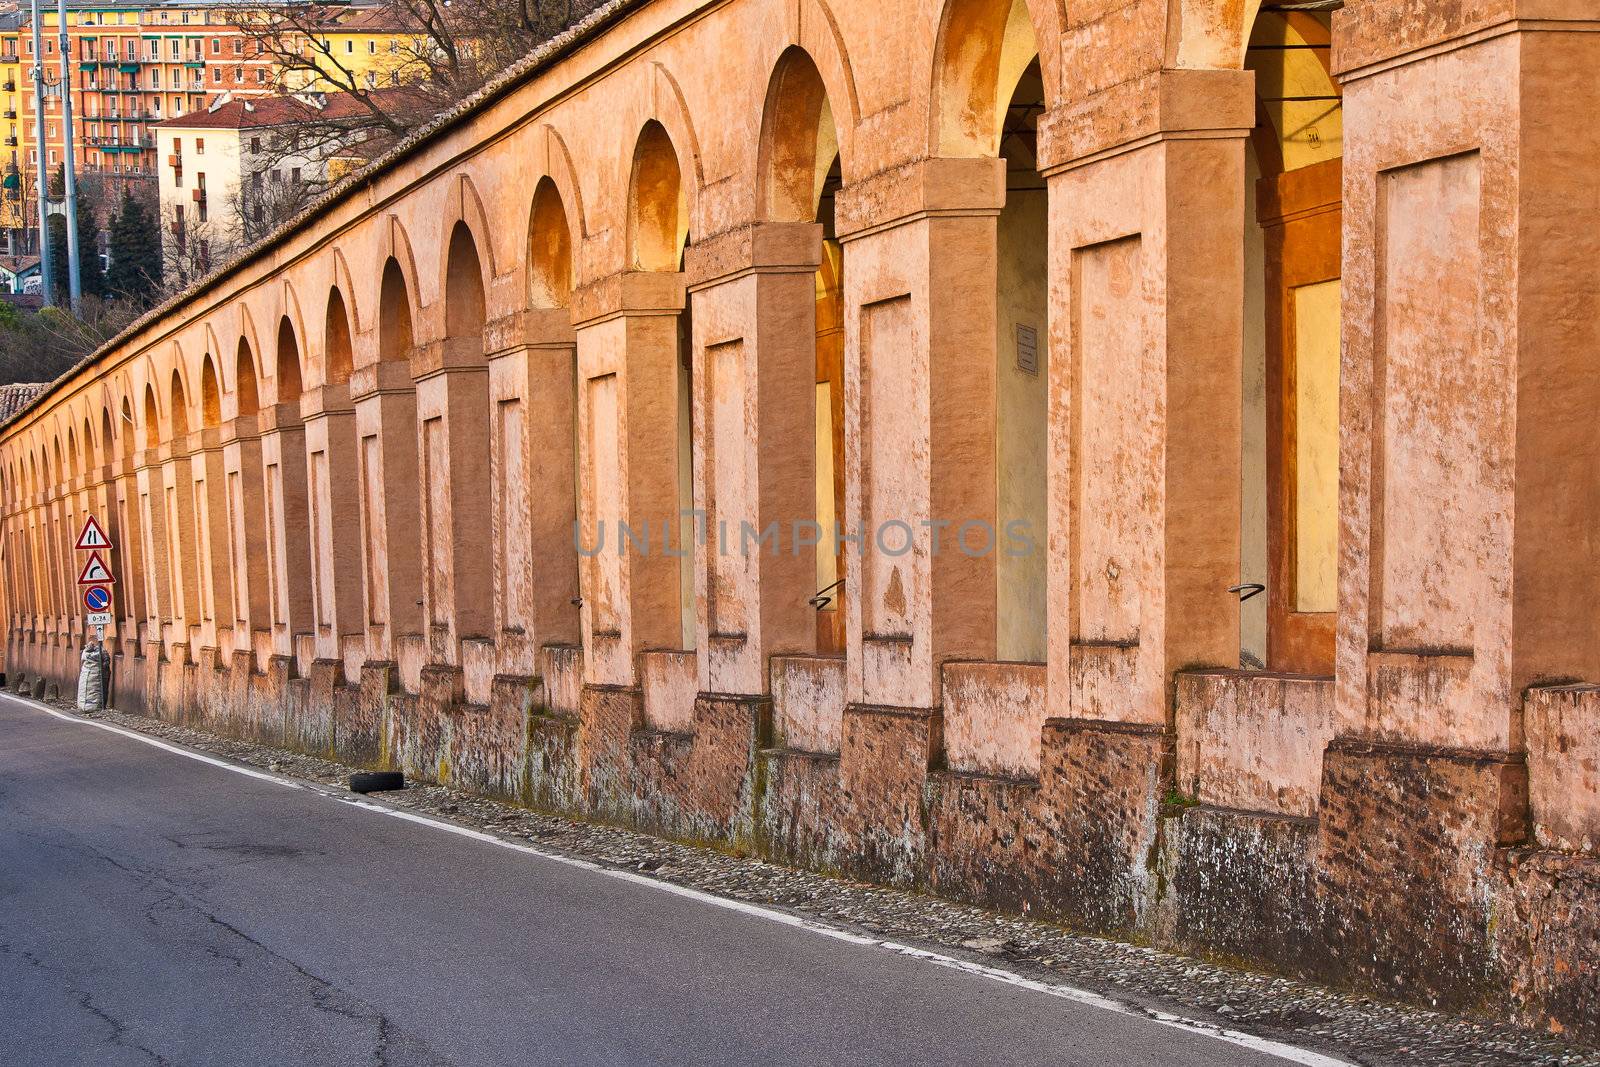 San Luca arcade in Bologna, Italy by minoandriani